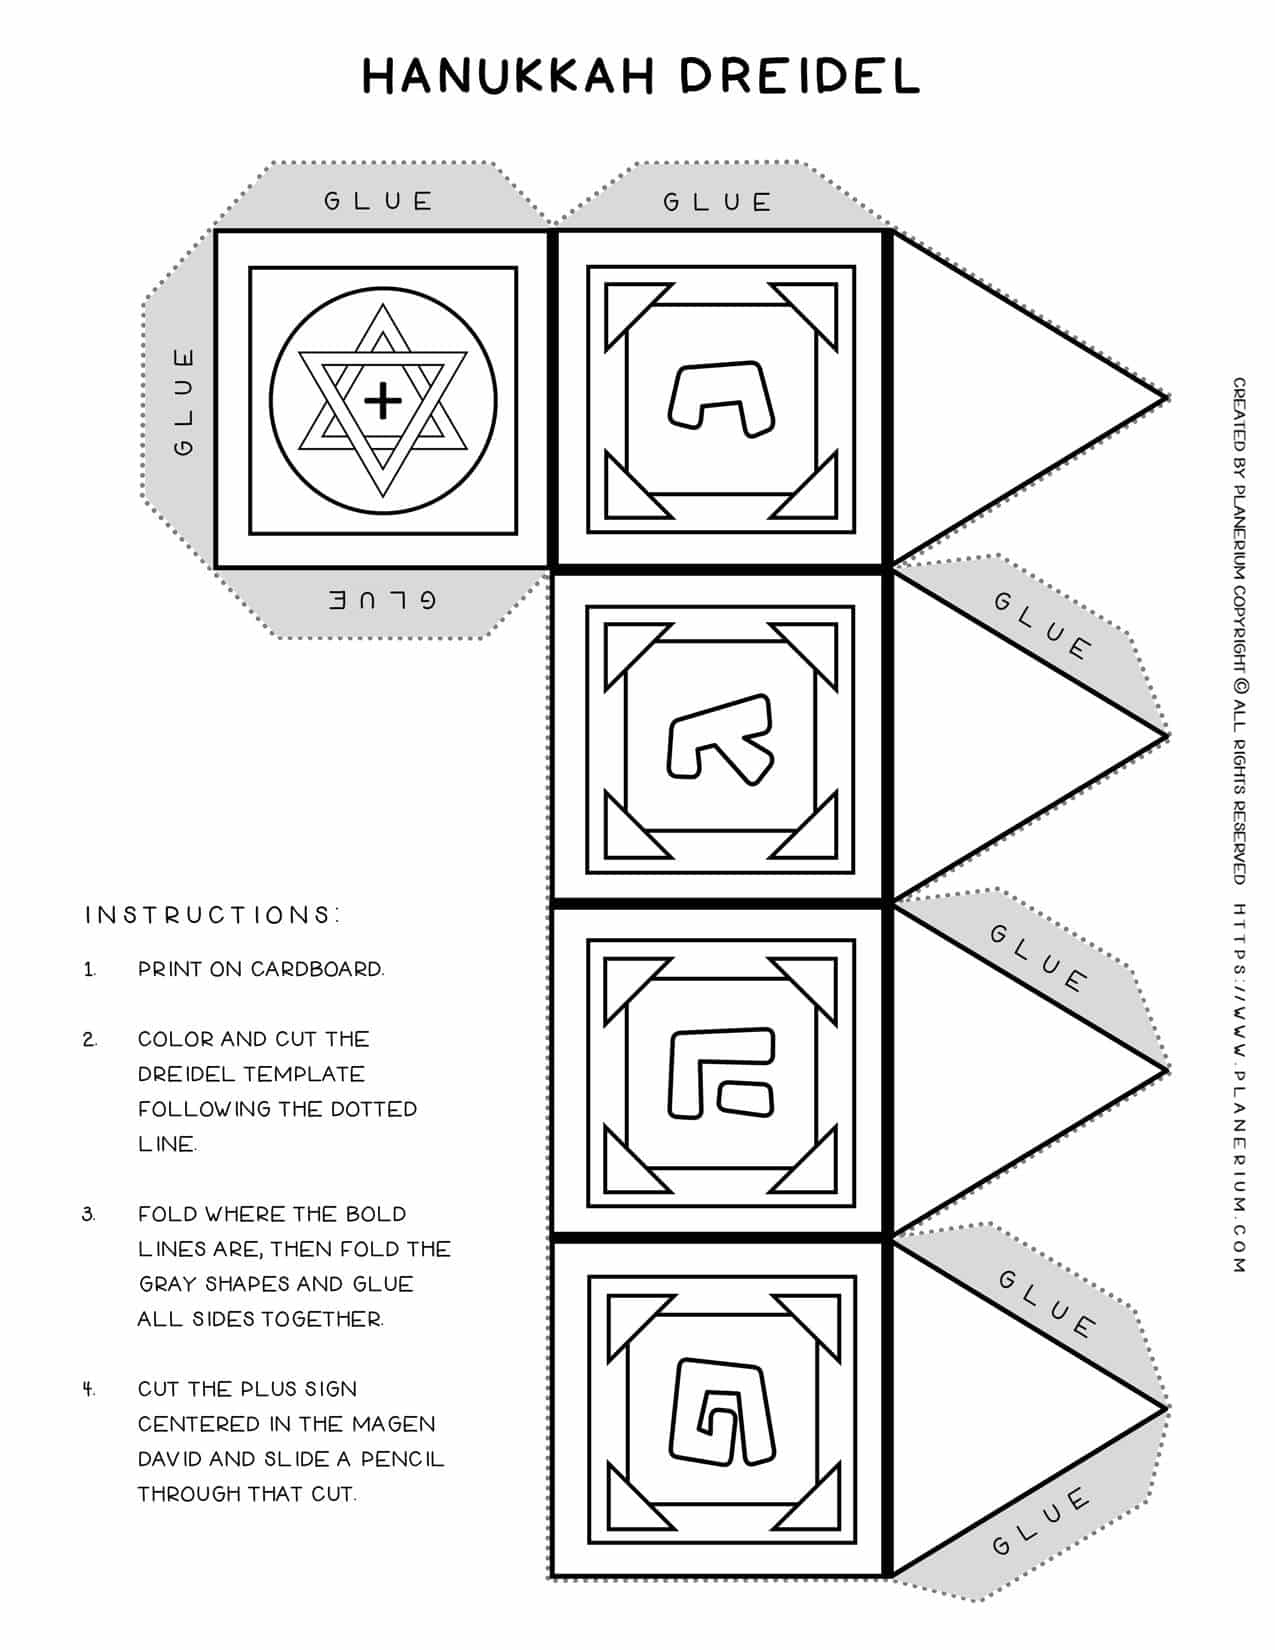 Dreidel Template - How to make a dreidel with the letter Pey - Hanukkah Worksheet | Planerium